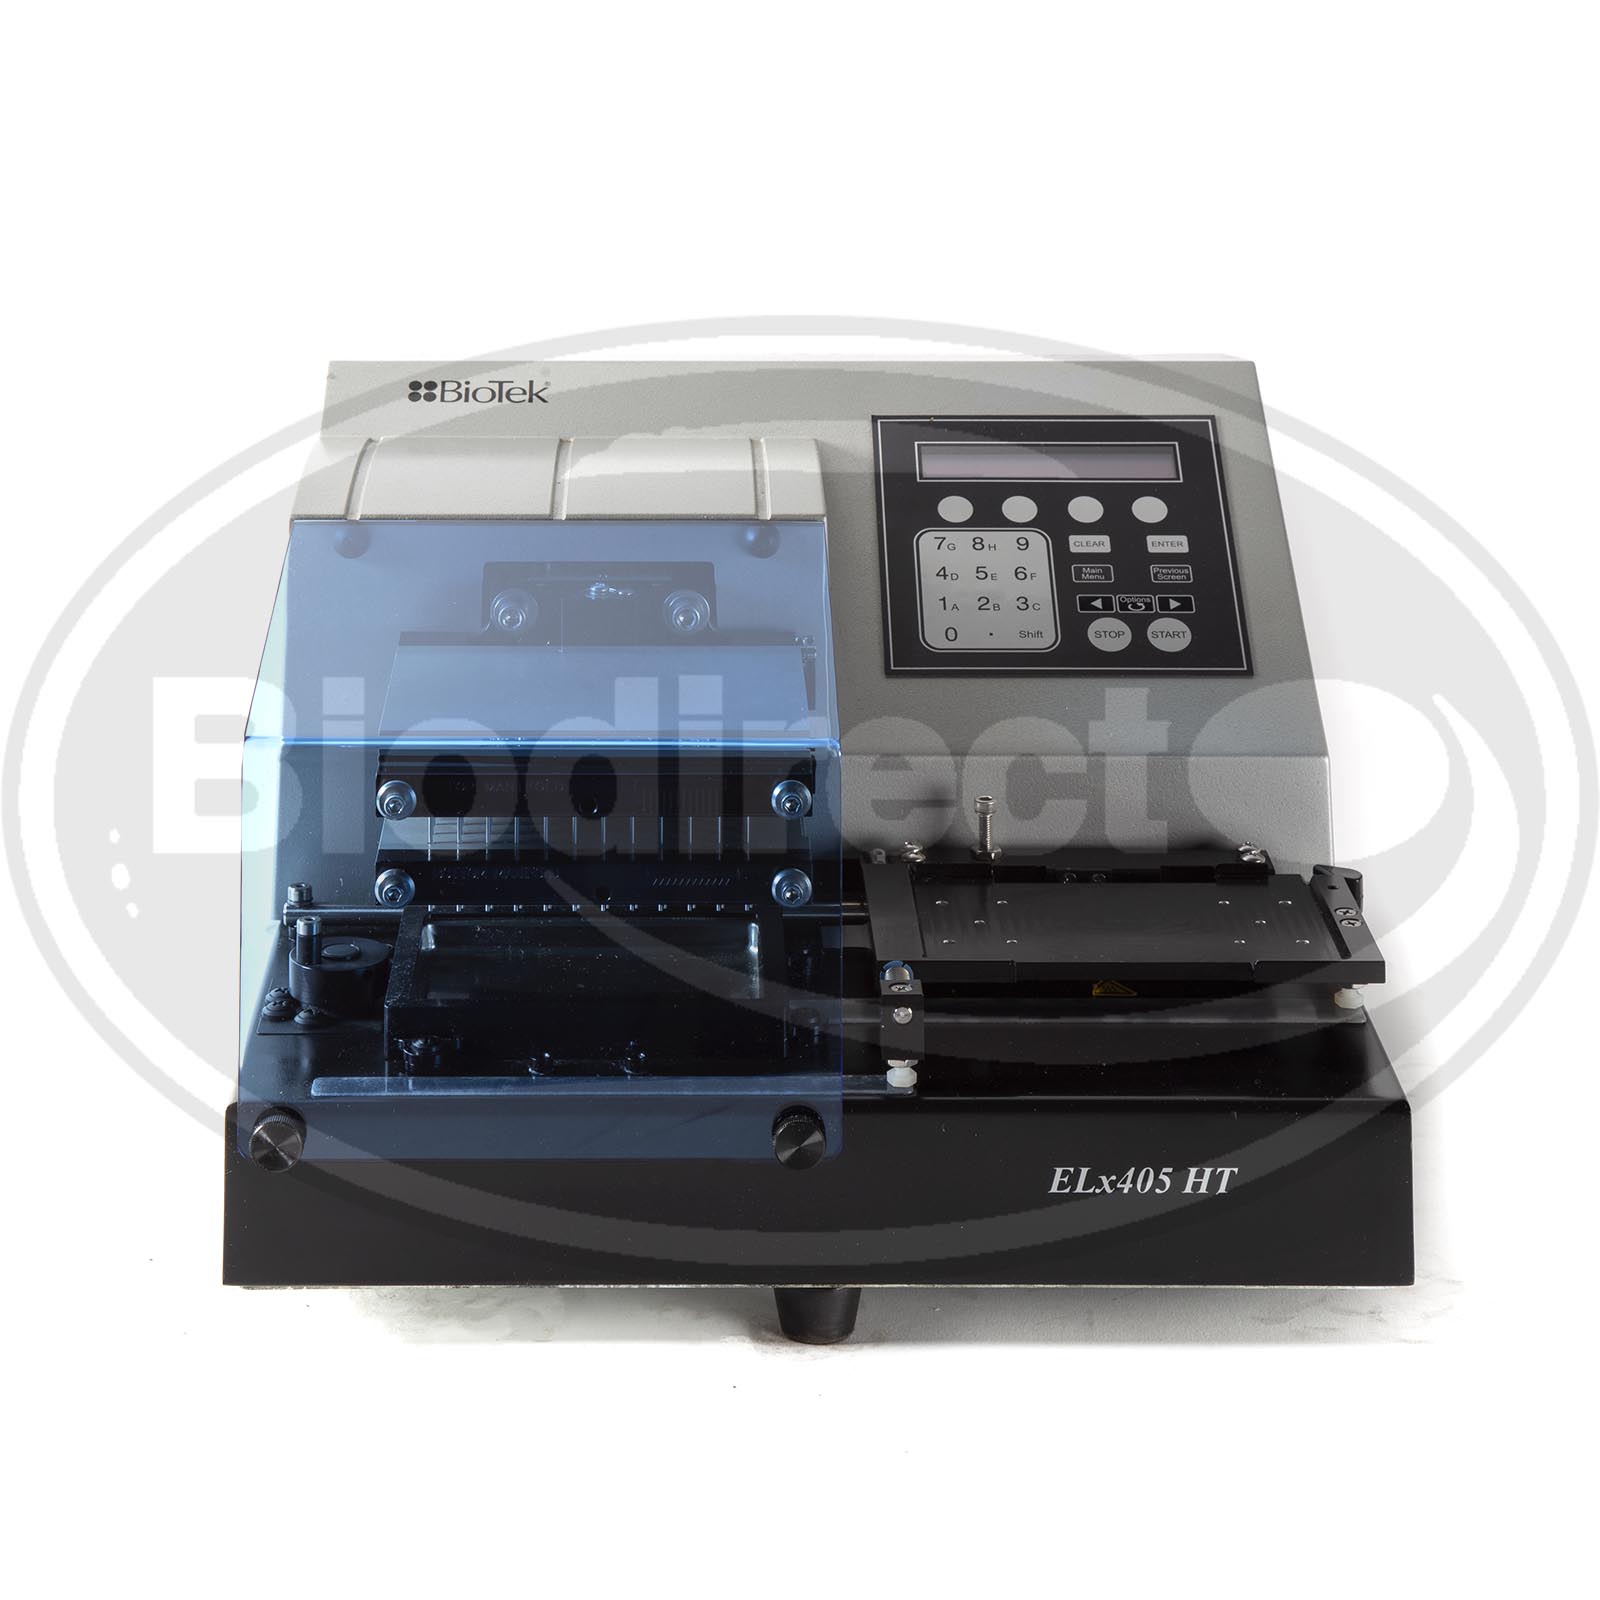 BioTek Instruments Microplate Washer ELx405 HT